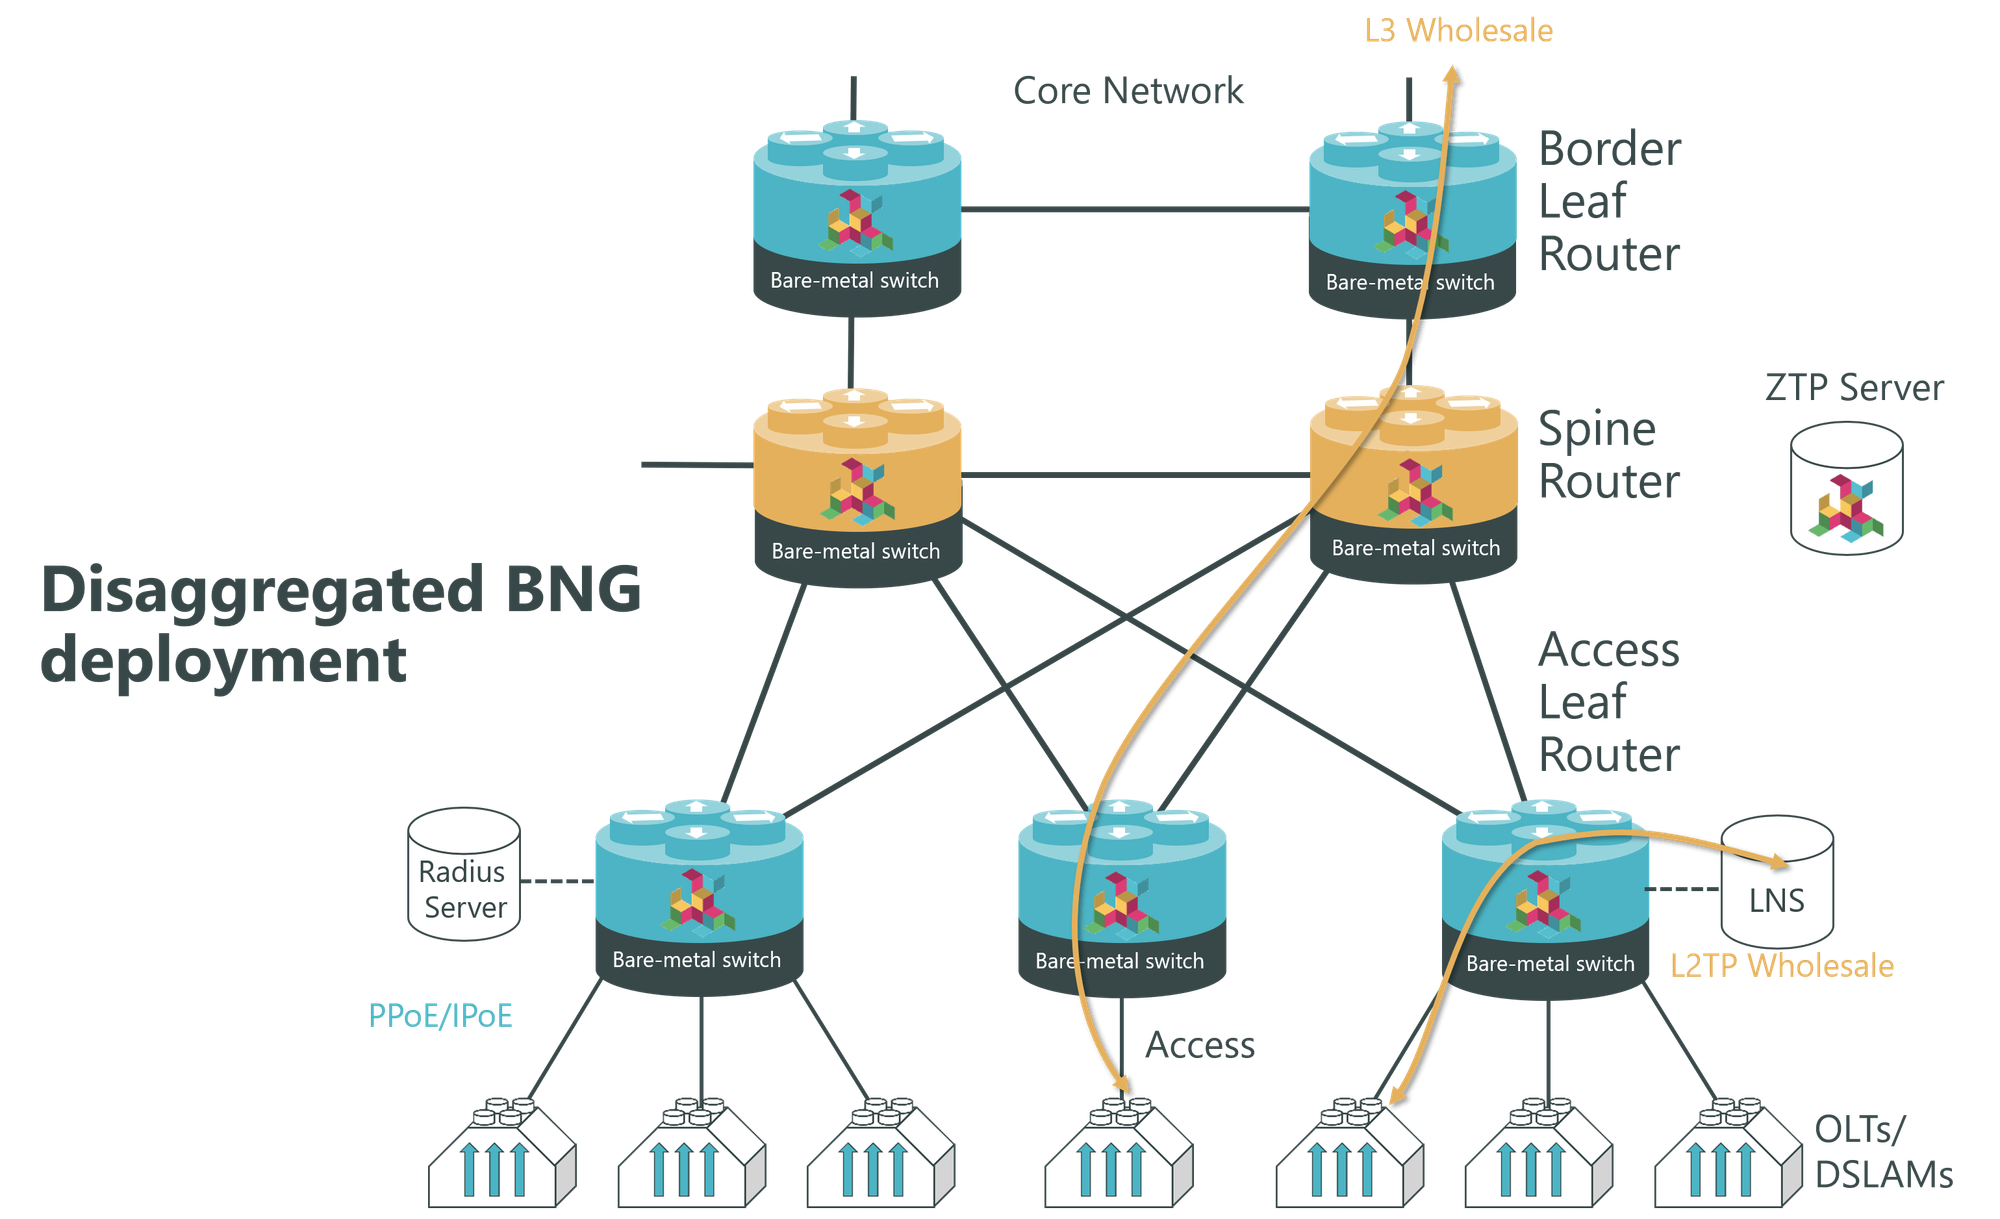 Network gateway